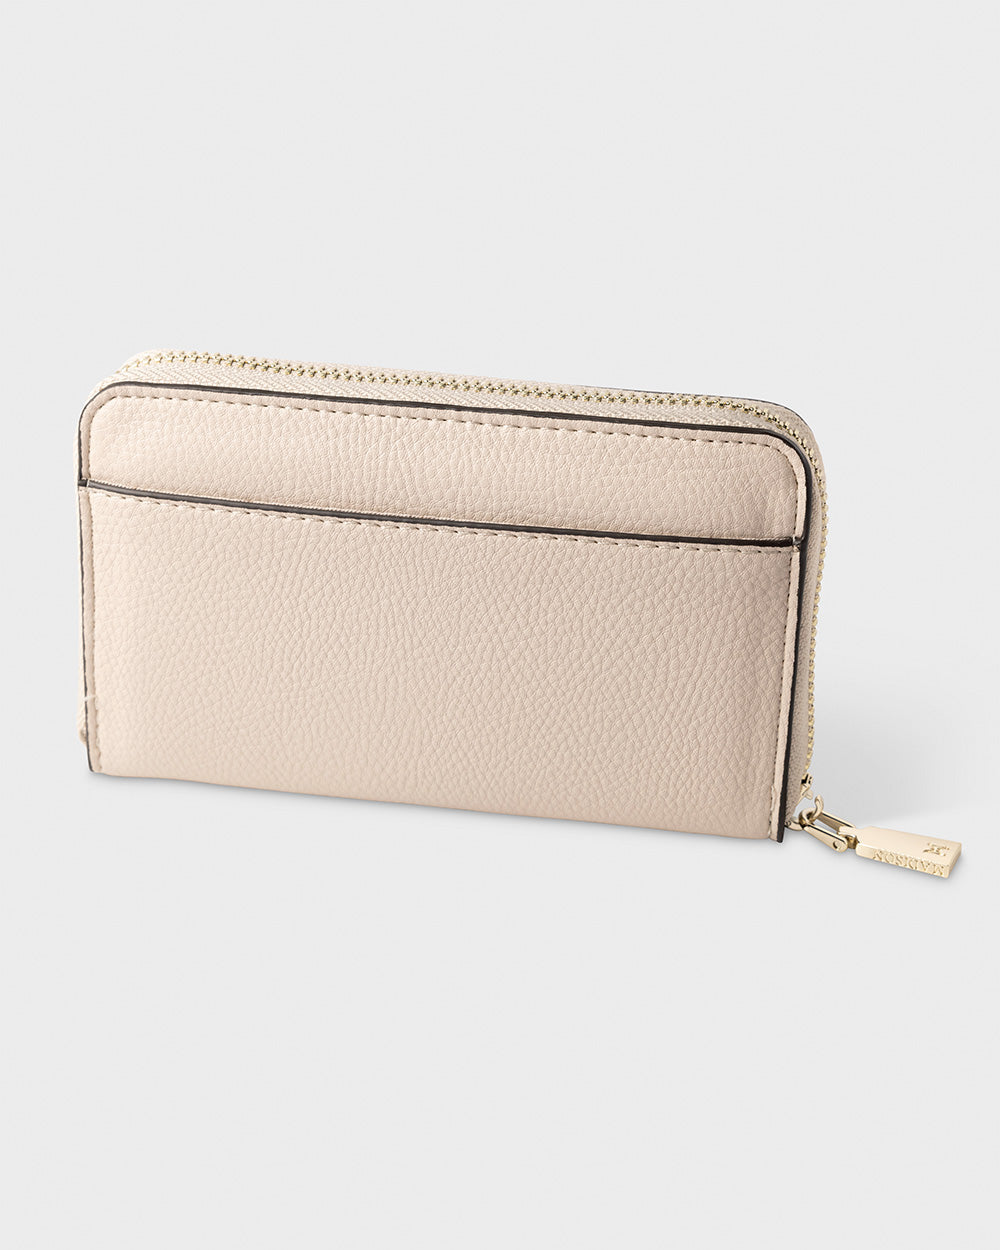 Handbag, Wallet, Coinpurse & Personalisation Charm Giftbox - Grace Dome Satchel & Mini Coinpurse-10